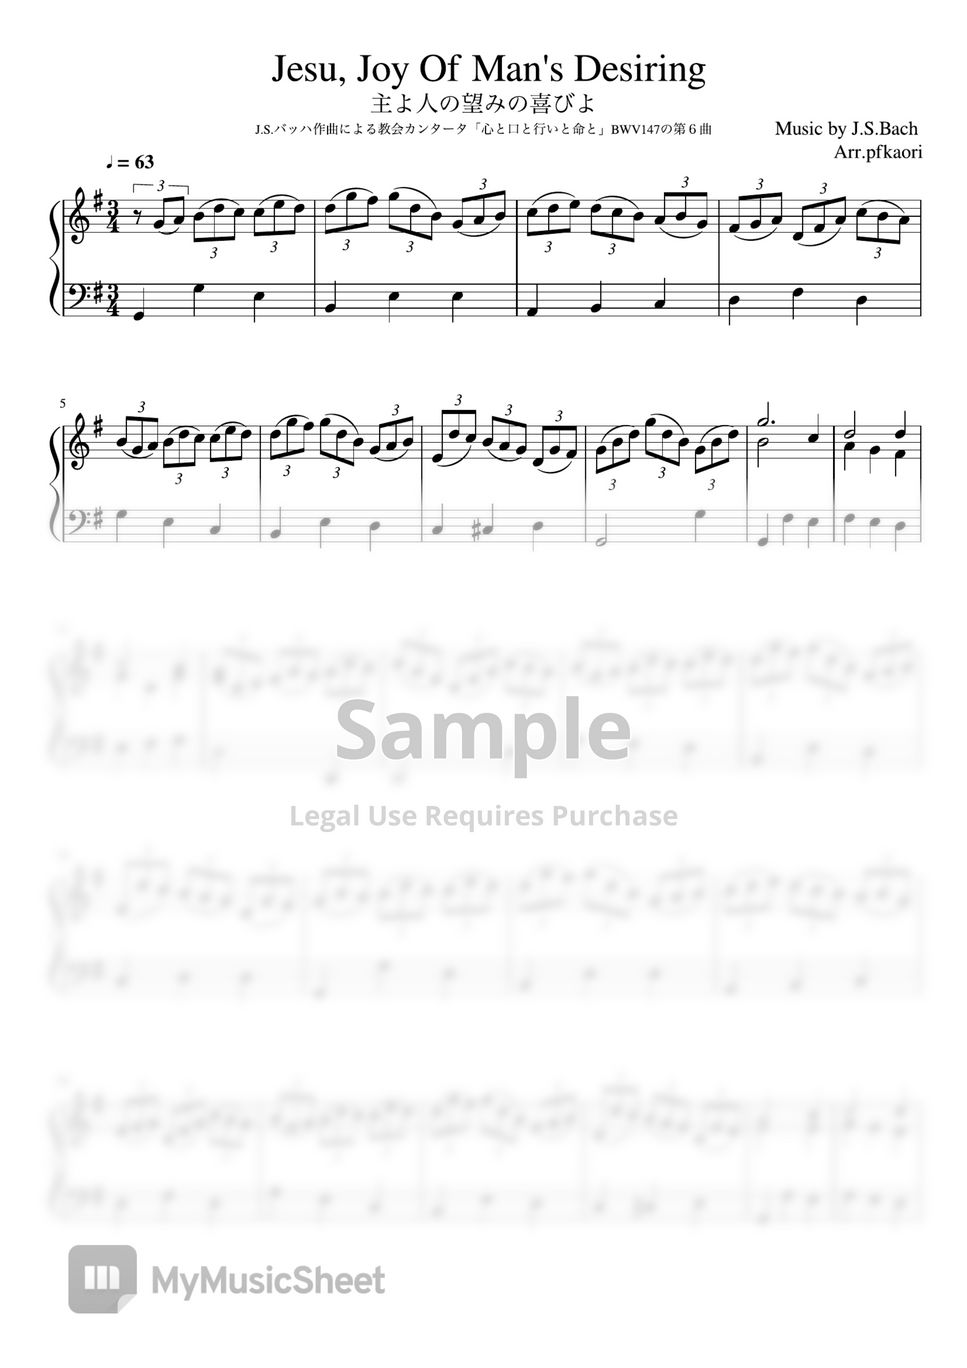 J.S.Bach - Jesu,JoyOfMan'sDesiring(G) (Pianosolo/beginner) by pfkaori